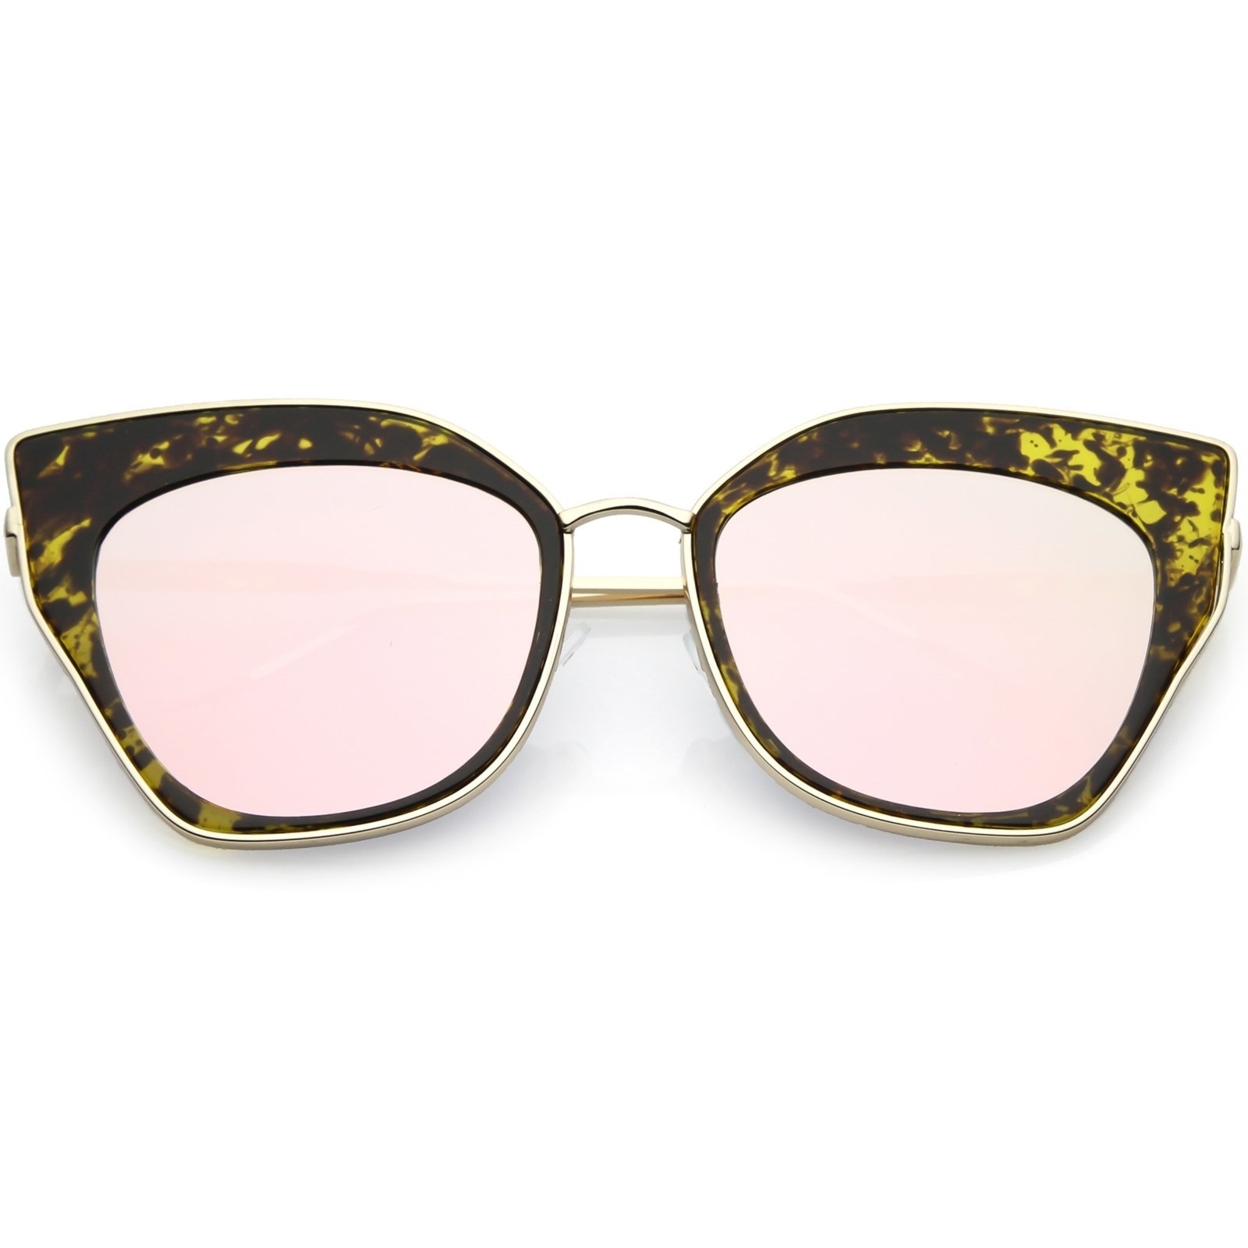 Oversize Pointed Cat Eye Sunglasses Slim Metal Nose Bridge Square Colored Mirror Lens 58mm - Gold Black / Blue Mirror